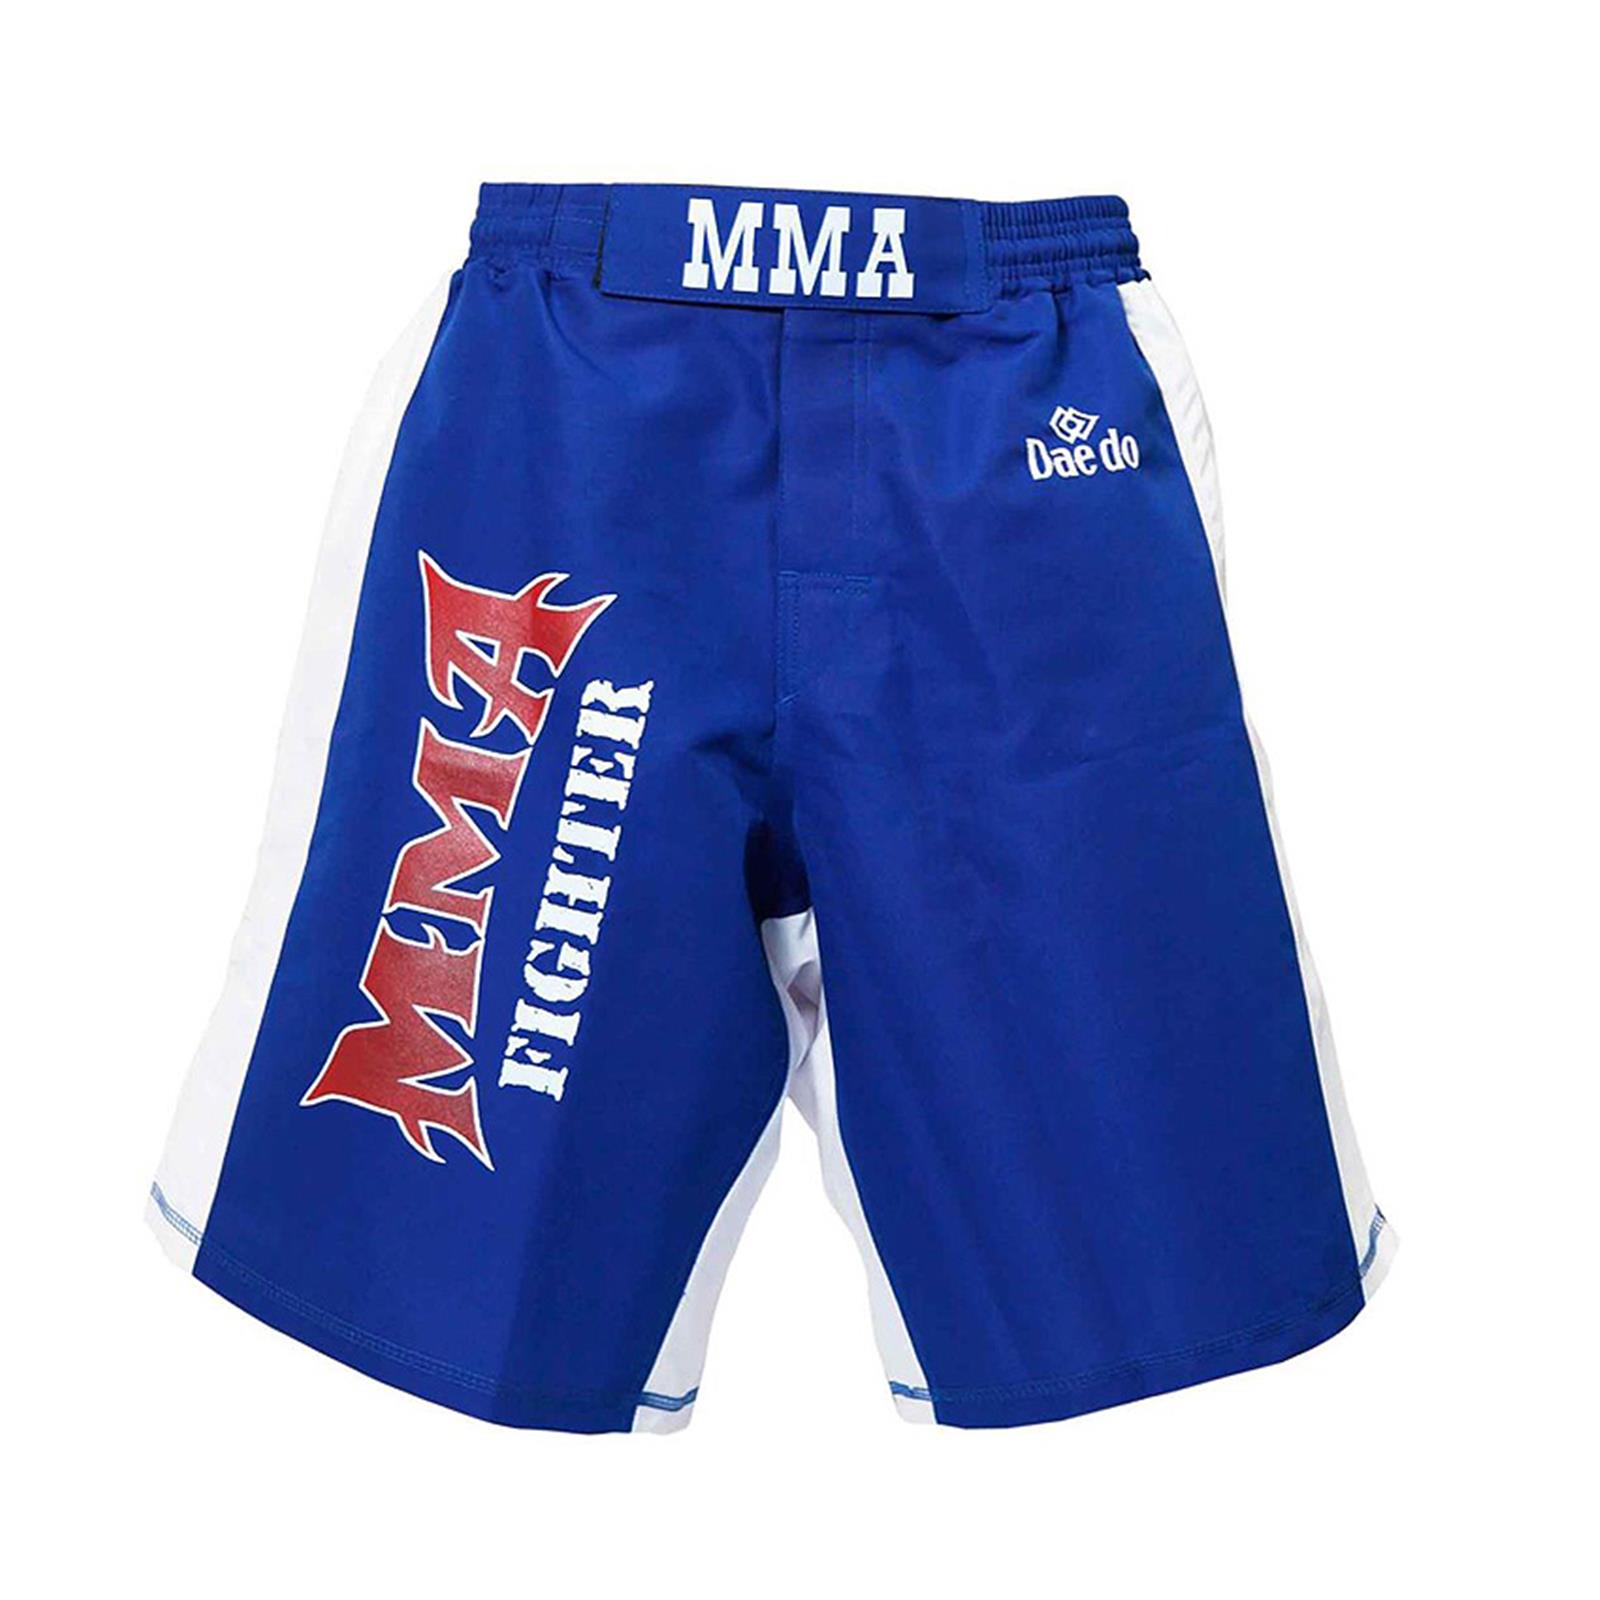 Dae Do Pantalone MMA Fighter (S - ROYAL)